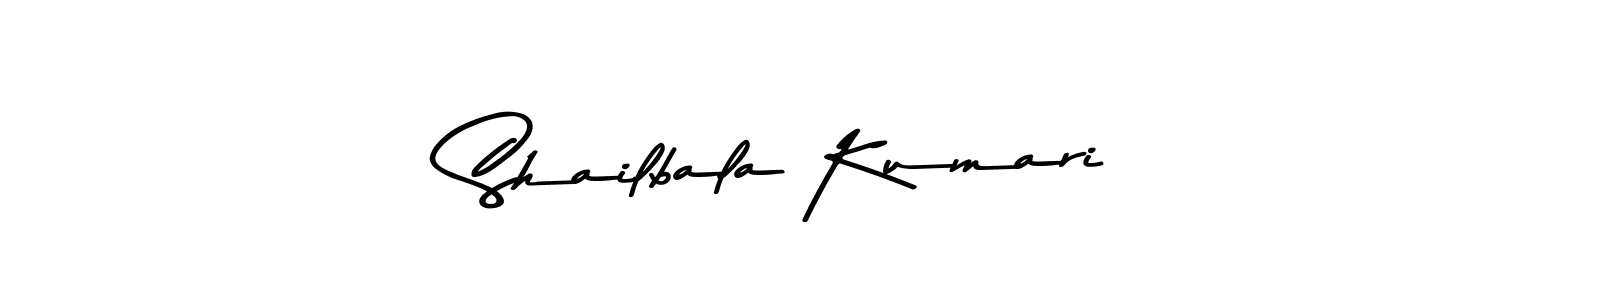 How to Draw Shailbala Kumari signature style? Asem Kandis PERSONAL USE is a latest design signature styles for name Shailbala Kumari. Shailbala Kumari signature style 9 images and pictures png